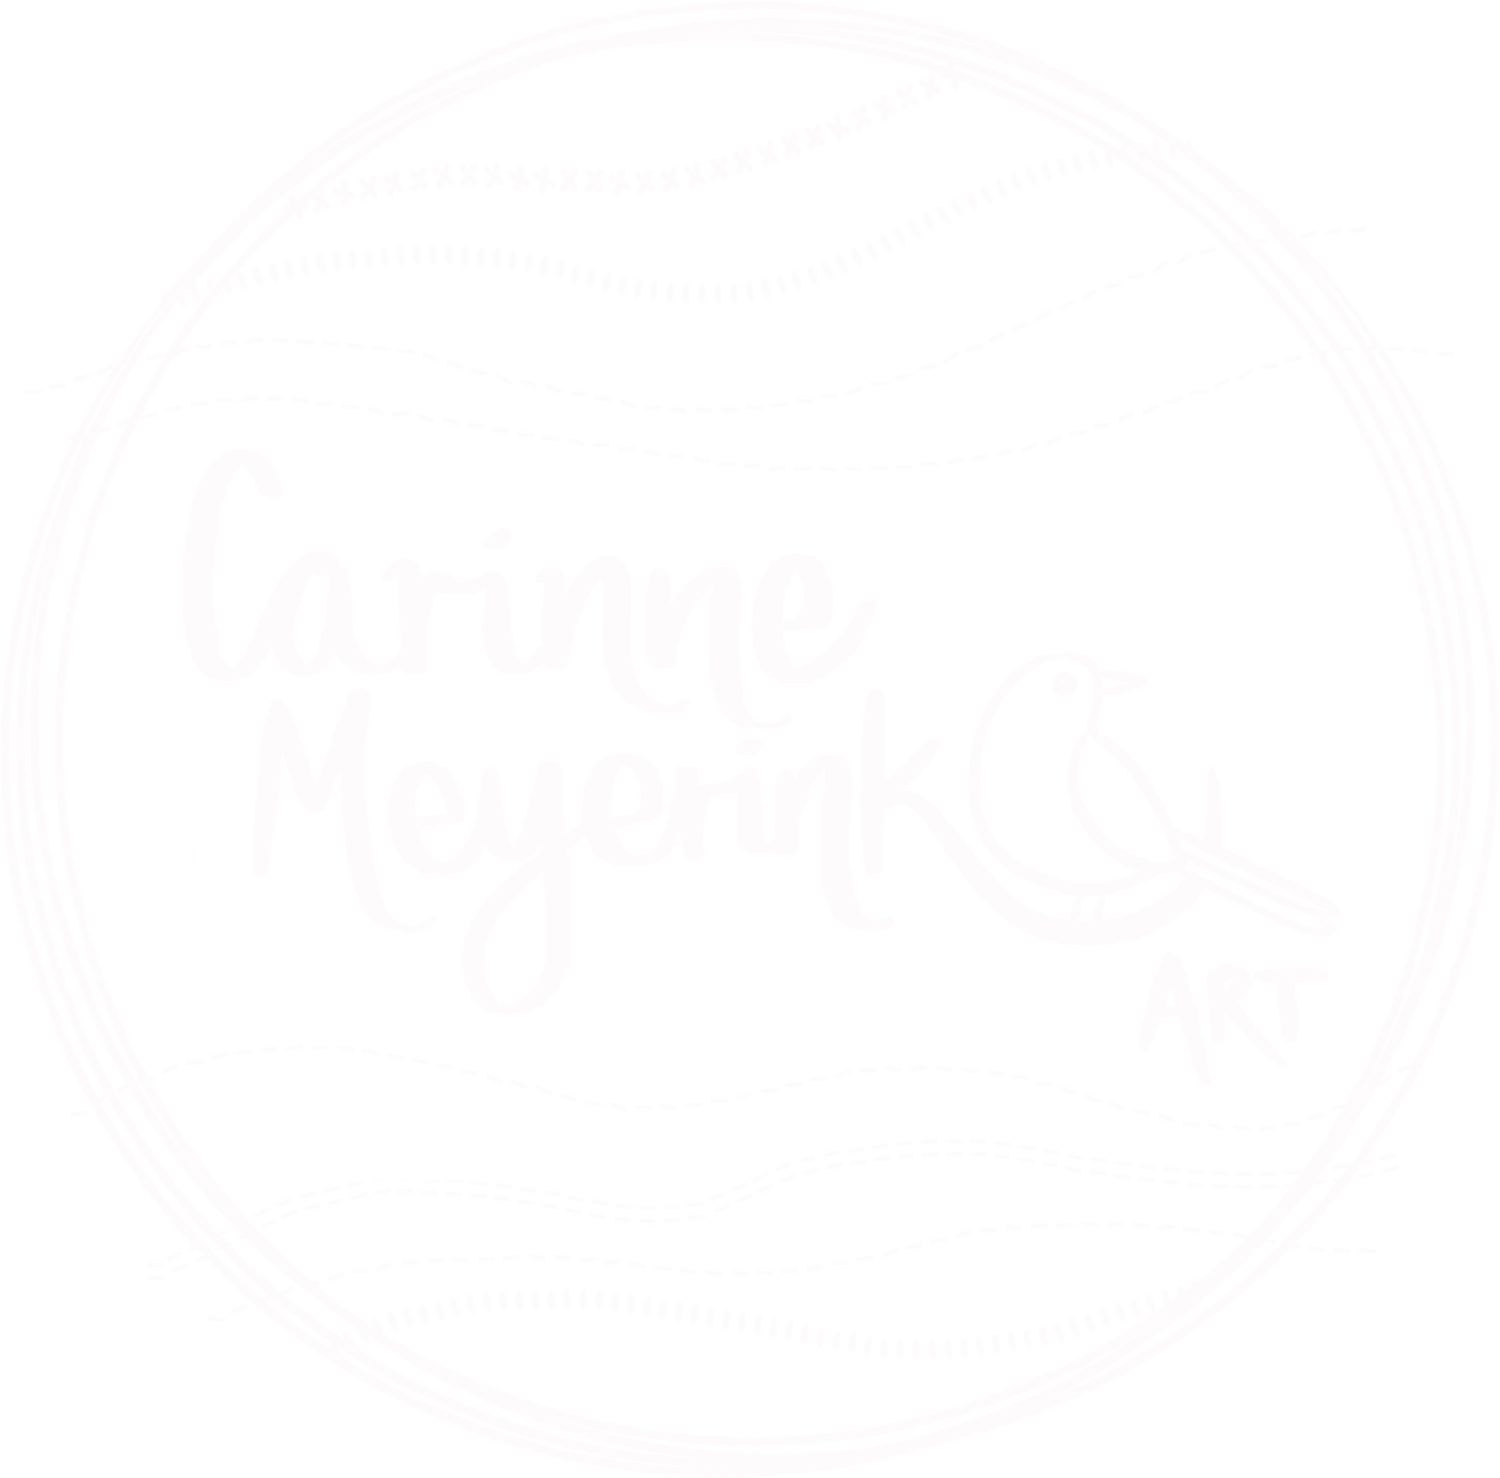 Carinne Meyerink Art